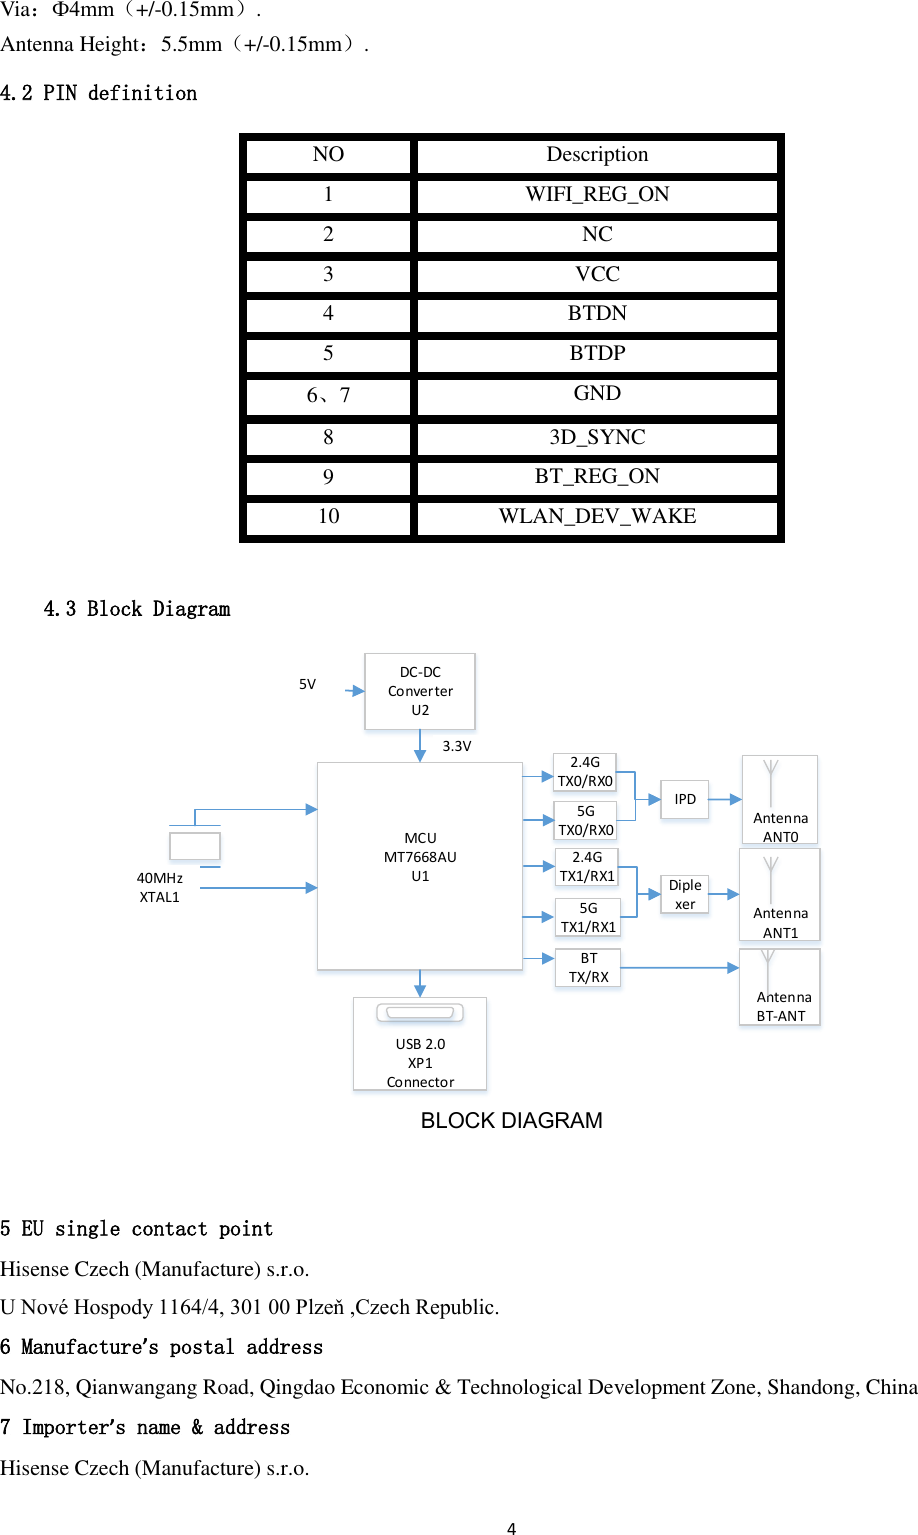 4  Via：Ф4mm（+/-0.15mm）. Antenna Height：5.5mm（+/-0.15mm）. 4.2 PIN definition NO Description 1   WIFI_REG_ON 2   NC 3   VCC 4   BTDN 5   BTDP 6、7 GND 8 3D_SYNC 9 BT_REG_ON 10 WLAN_DEV_WAKE  4.3 Block Diagram USB 2.0XP1ConnectorDC-DC ConverterU2MCUMT7668AUU15V 3.3V40MHzXTAL12.4G TX0/RX0                    Antenna                        ANT0                    Antenna                        ANT15G TX0/RX0IPD2.4G TX1/RX15G TX1/RX1DiplexerBT TX/RX  Antenna                        BT-ANT BLOCK DIAGRAM 5 EU single contact point Hisense Czech (Manufacture) s.r.o. U Nové Hospody 1164/4, 301 00 Plzeň ,Czech Republic. 6 Manufacture’s postal address No.218, Qianwangang Road, Qingdao Economic &amp; Technological Development Zone, Shandong, China 7 Importer’s name &amp; address Hisense Czech (Manufacture) s.r.o. 